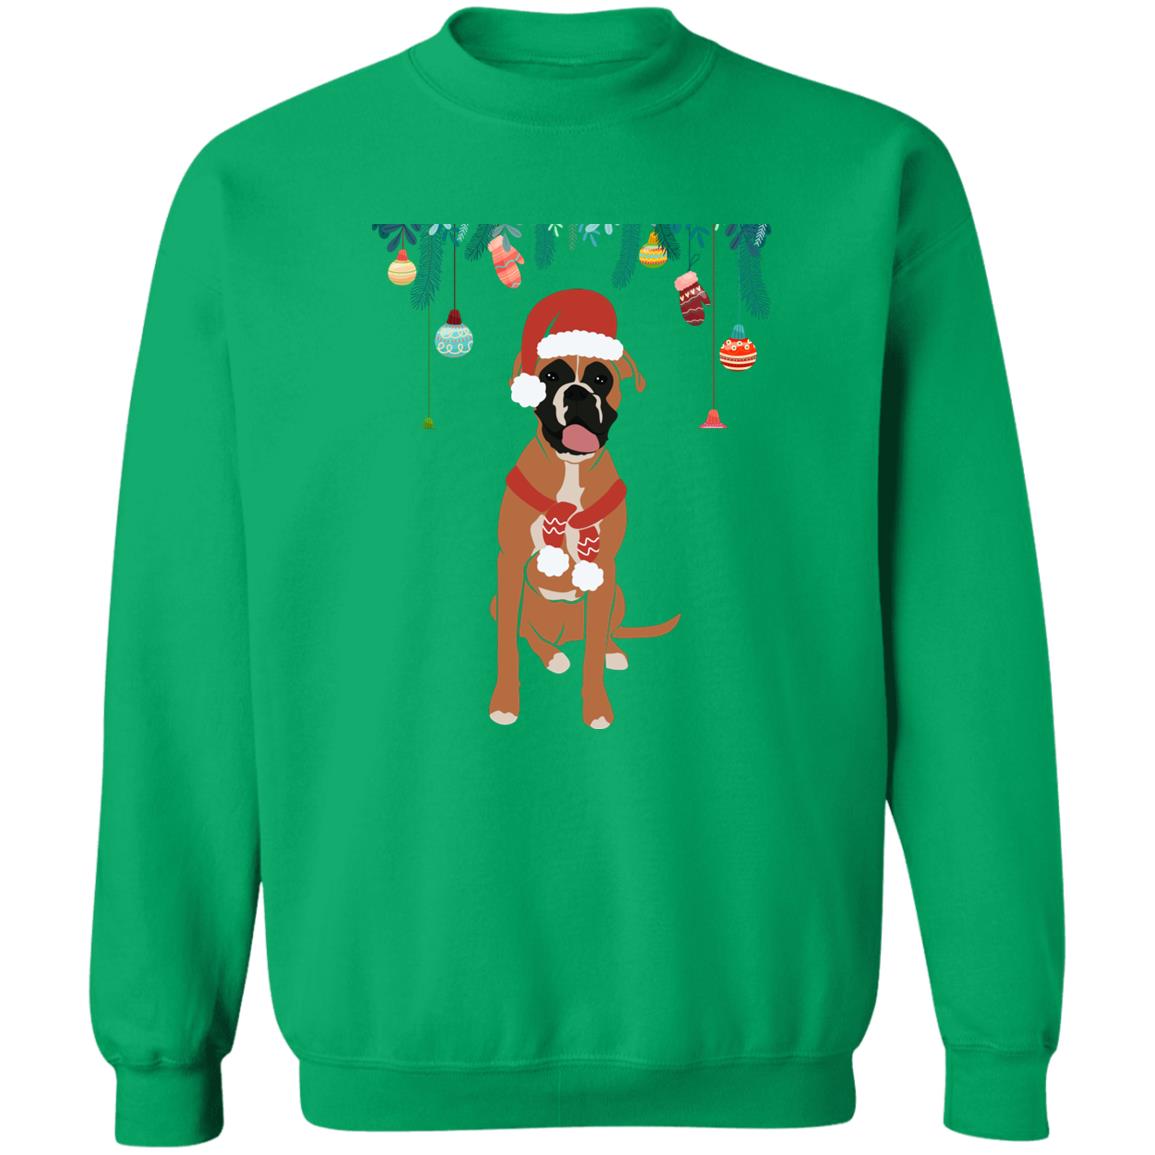 It's a Dog on Christmas - G180 Crewneck Pullover Sweatshirt